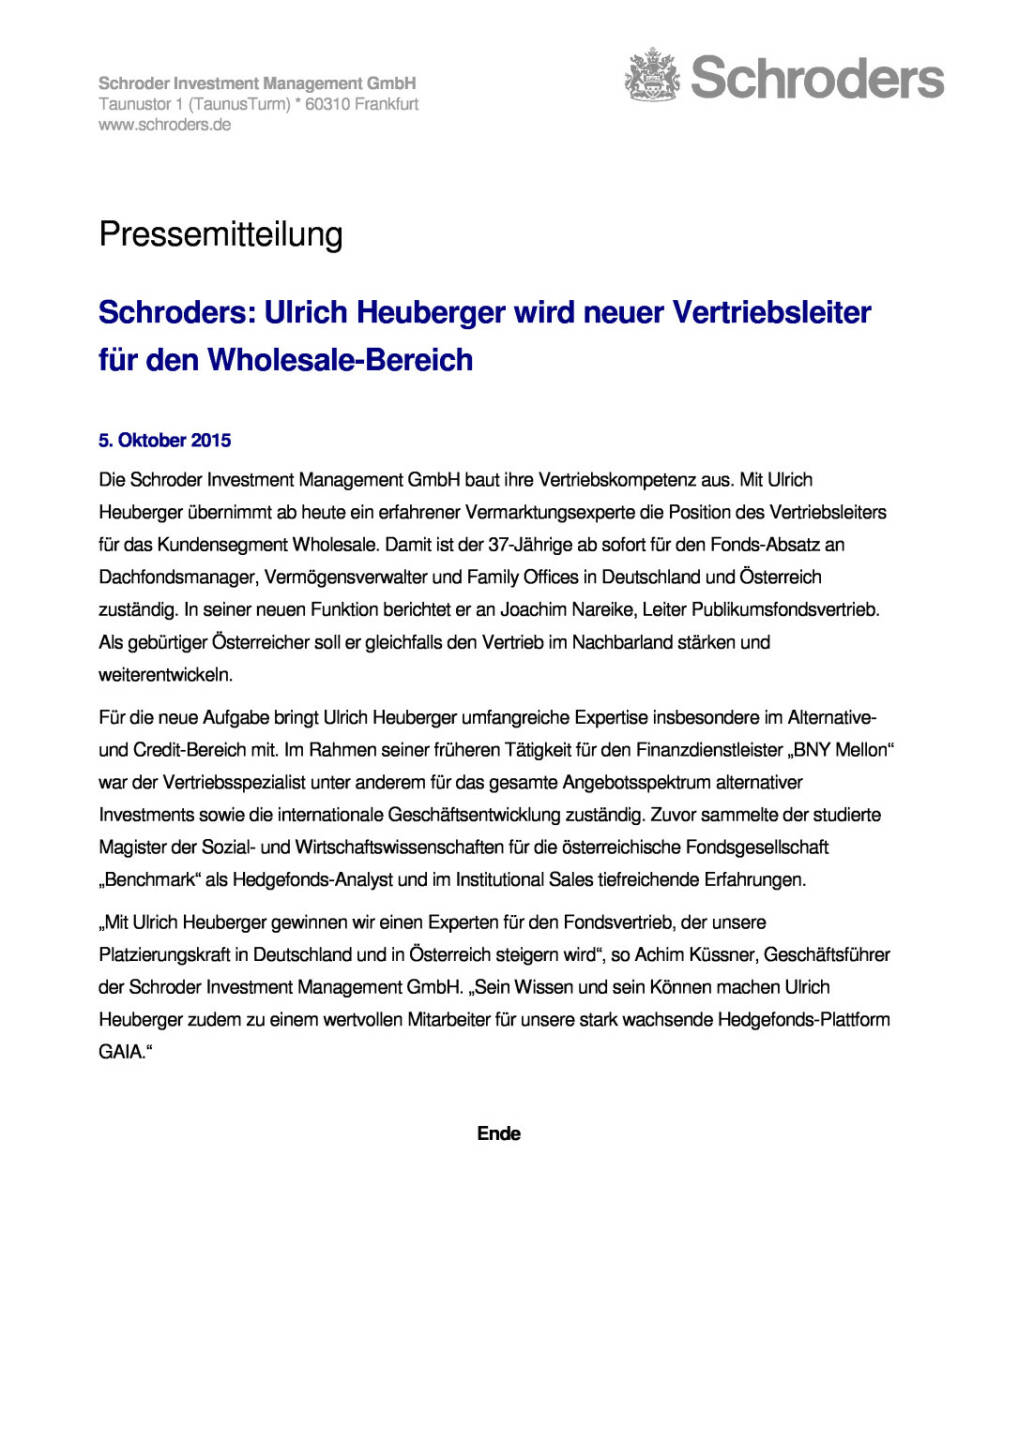 Schroders: Ulrich Heuberger wird neuer Vertriebsleiter für den Wholesale-Bereich, Seite 1/2, komplettes Dokument unter http://boerse-social.com/static/uploads/file_400_schroders_ulrich_heuberger_wird_neuer_vertriebsleiter_für_den_wholesale-bereich.pdf